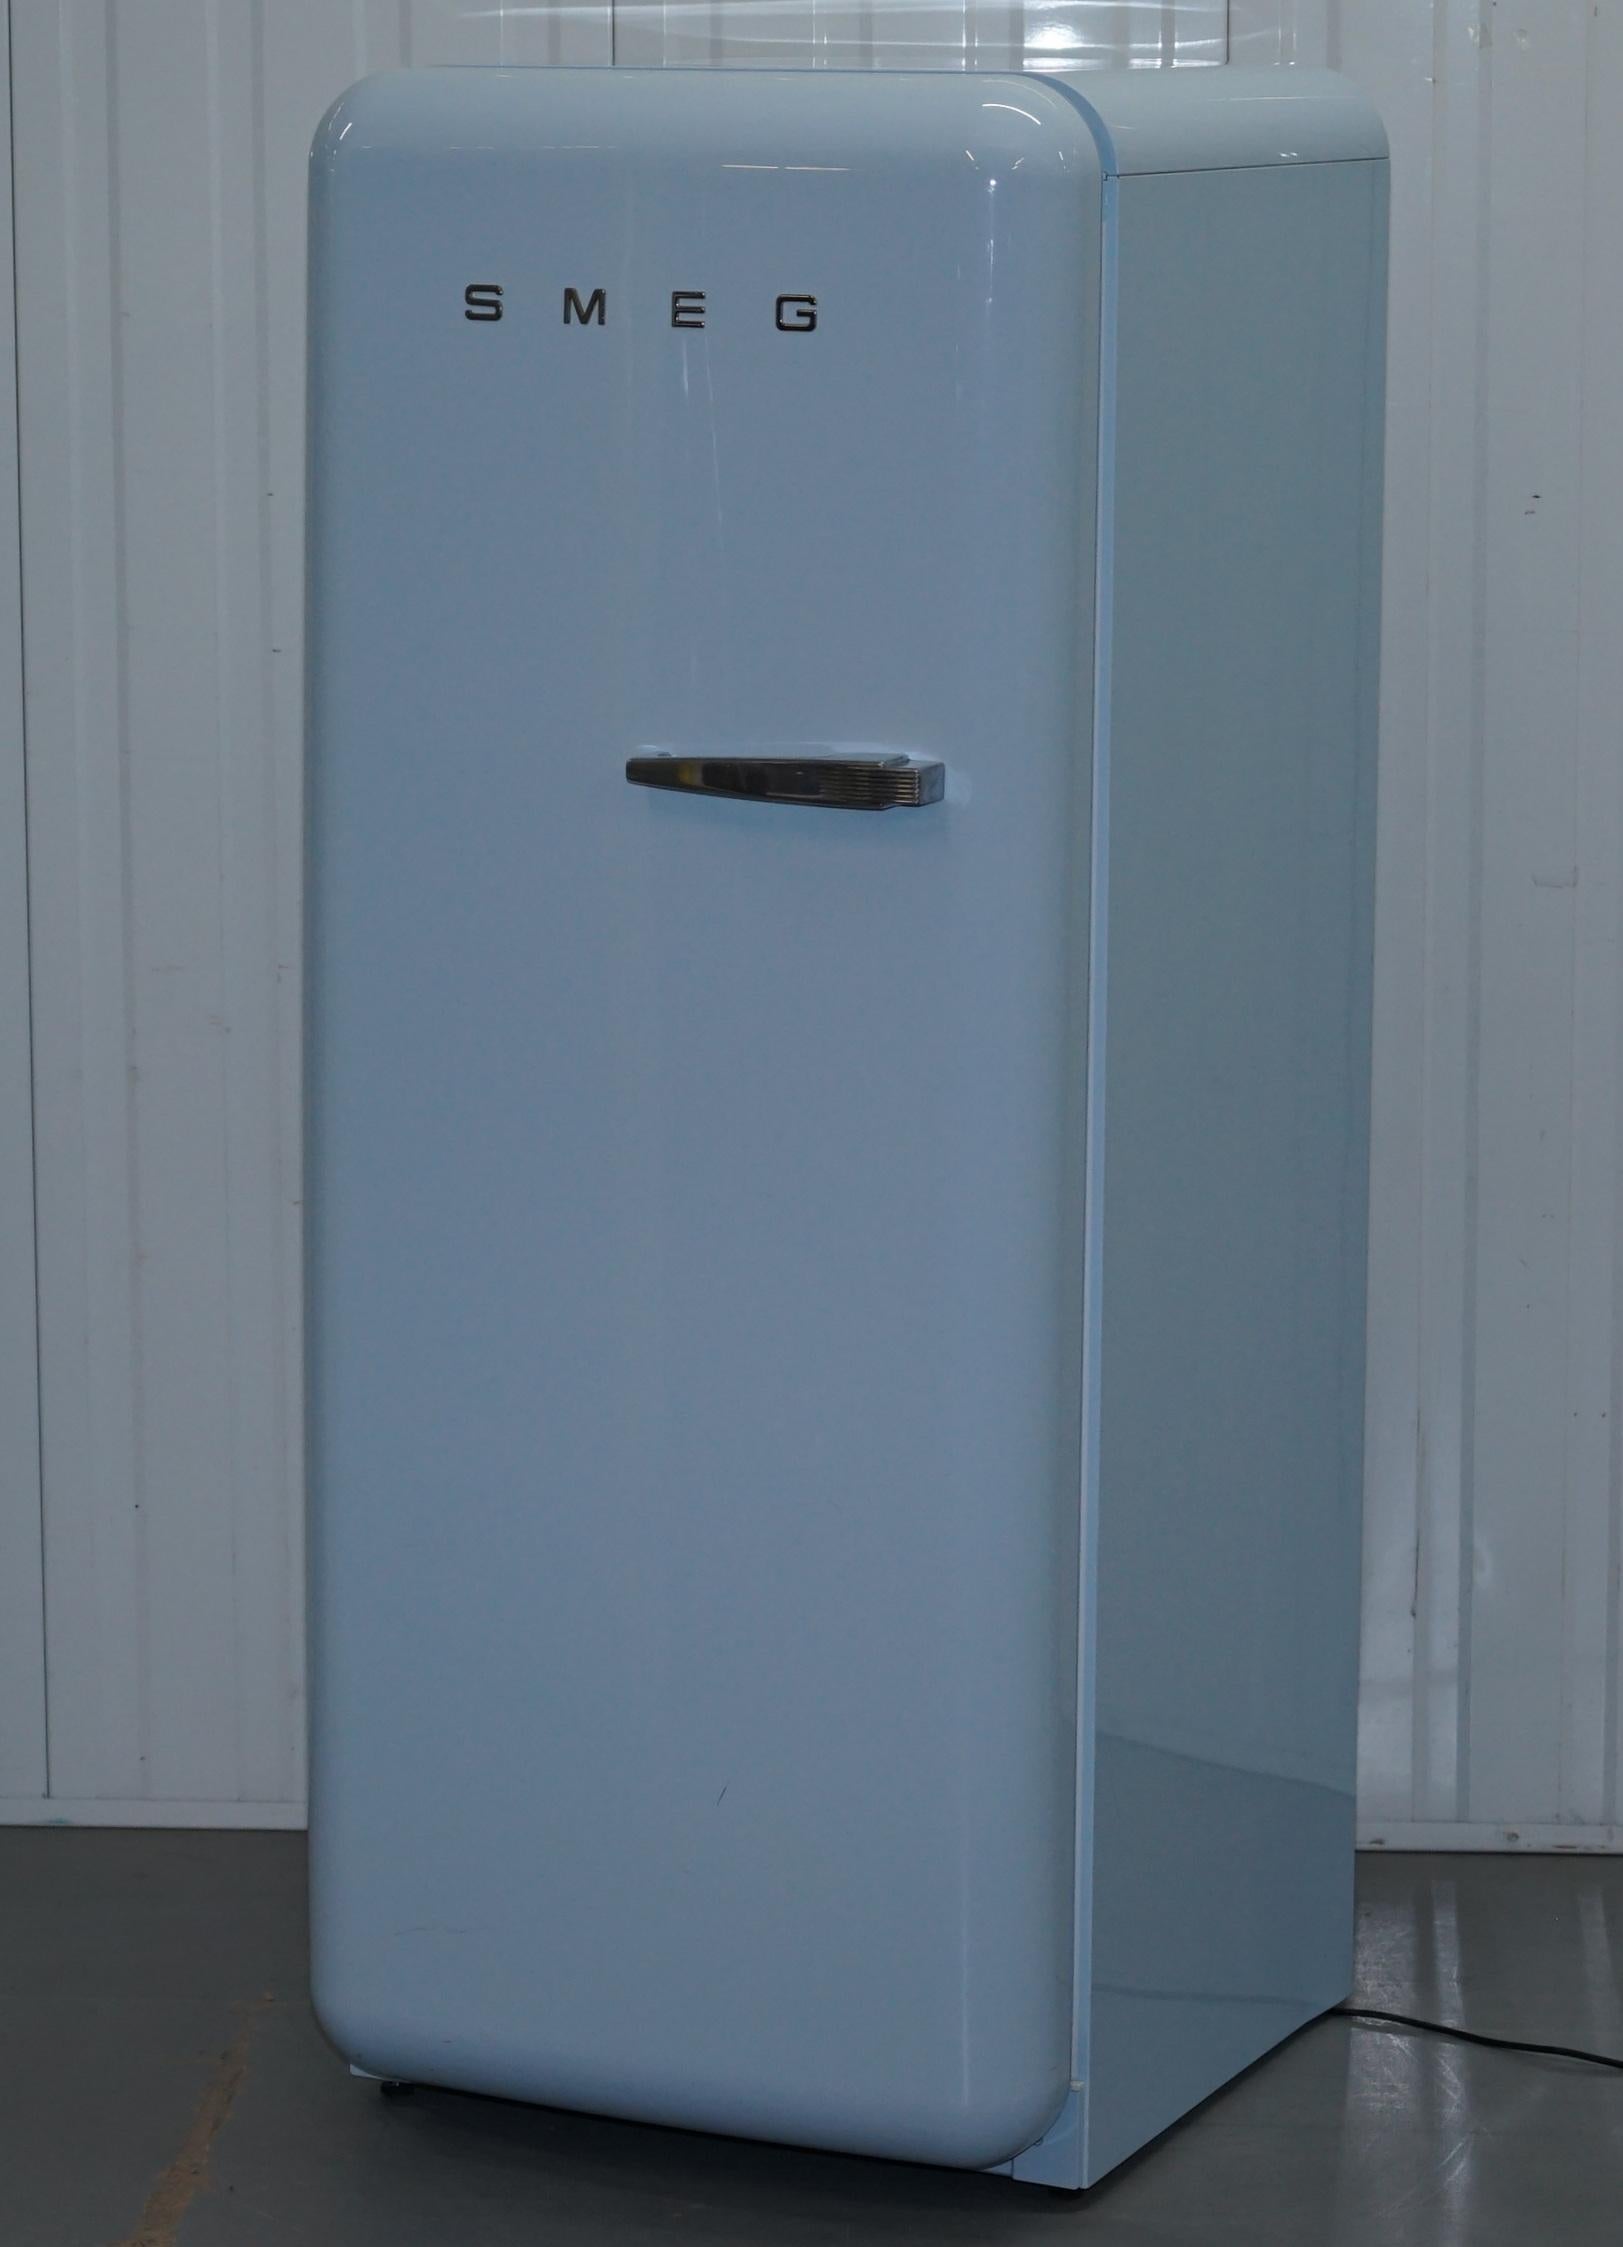 smeg blue fridge